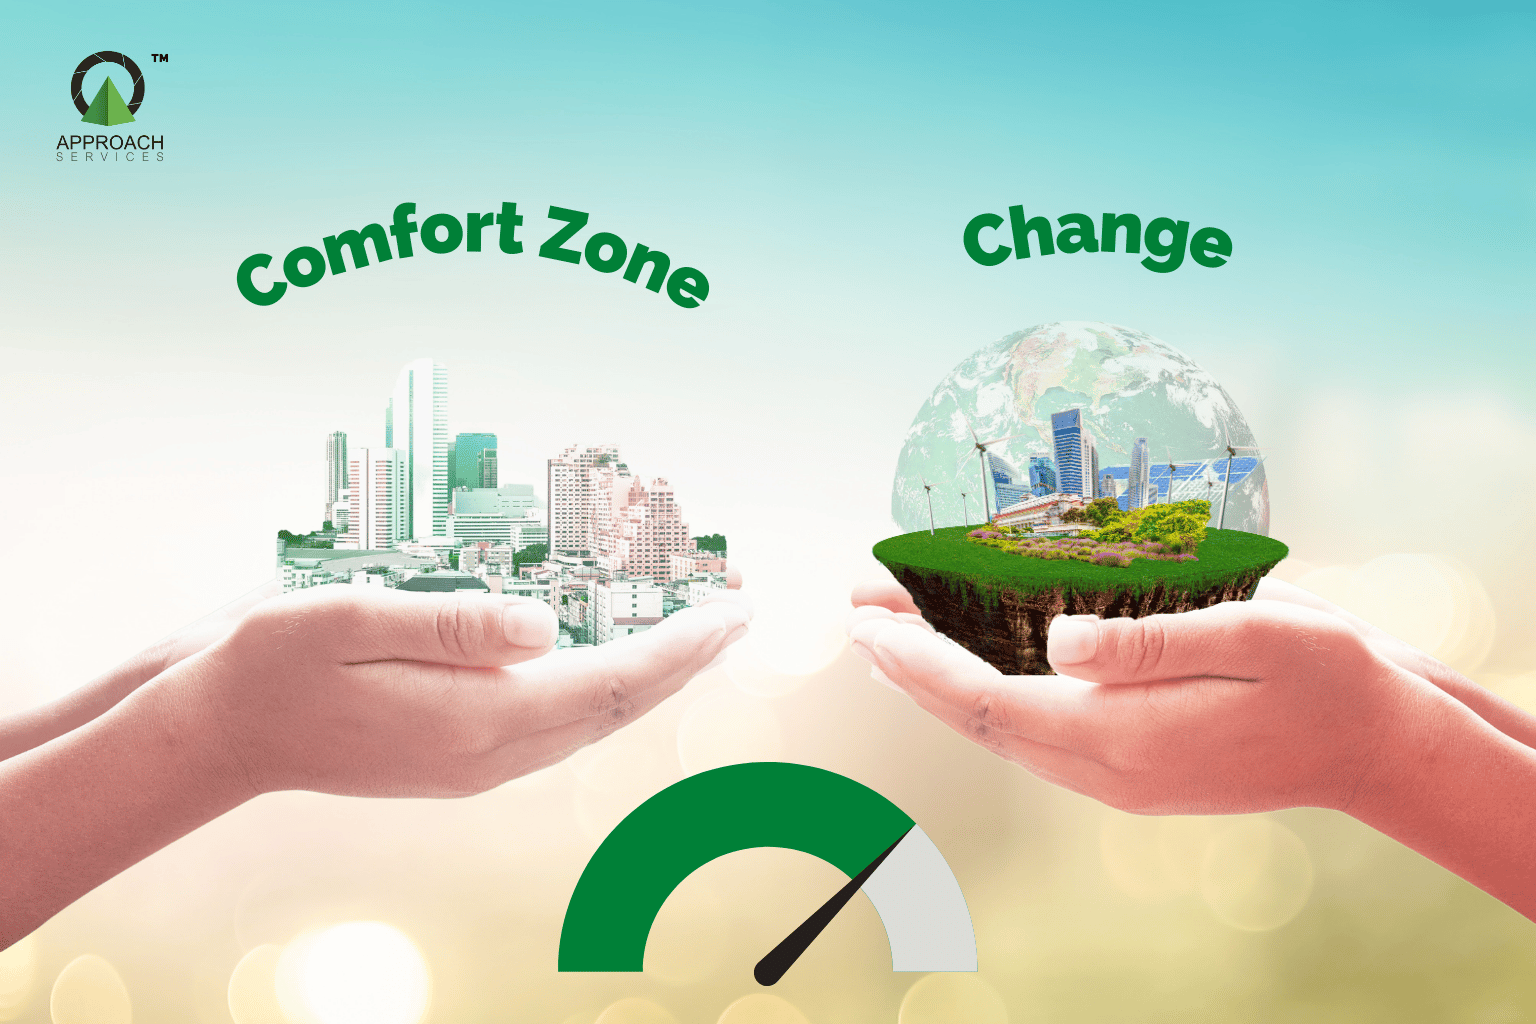 Change Champions are essential - Comfort Zone vs Change